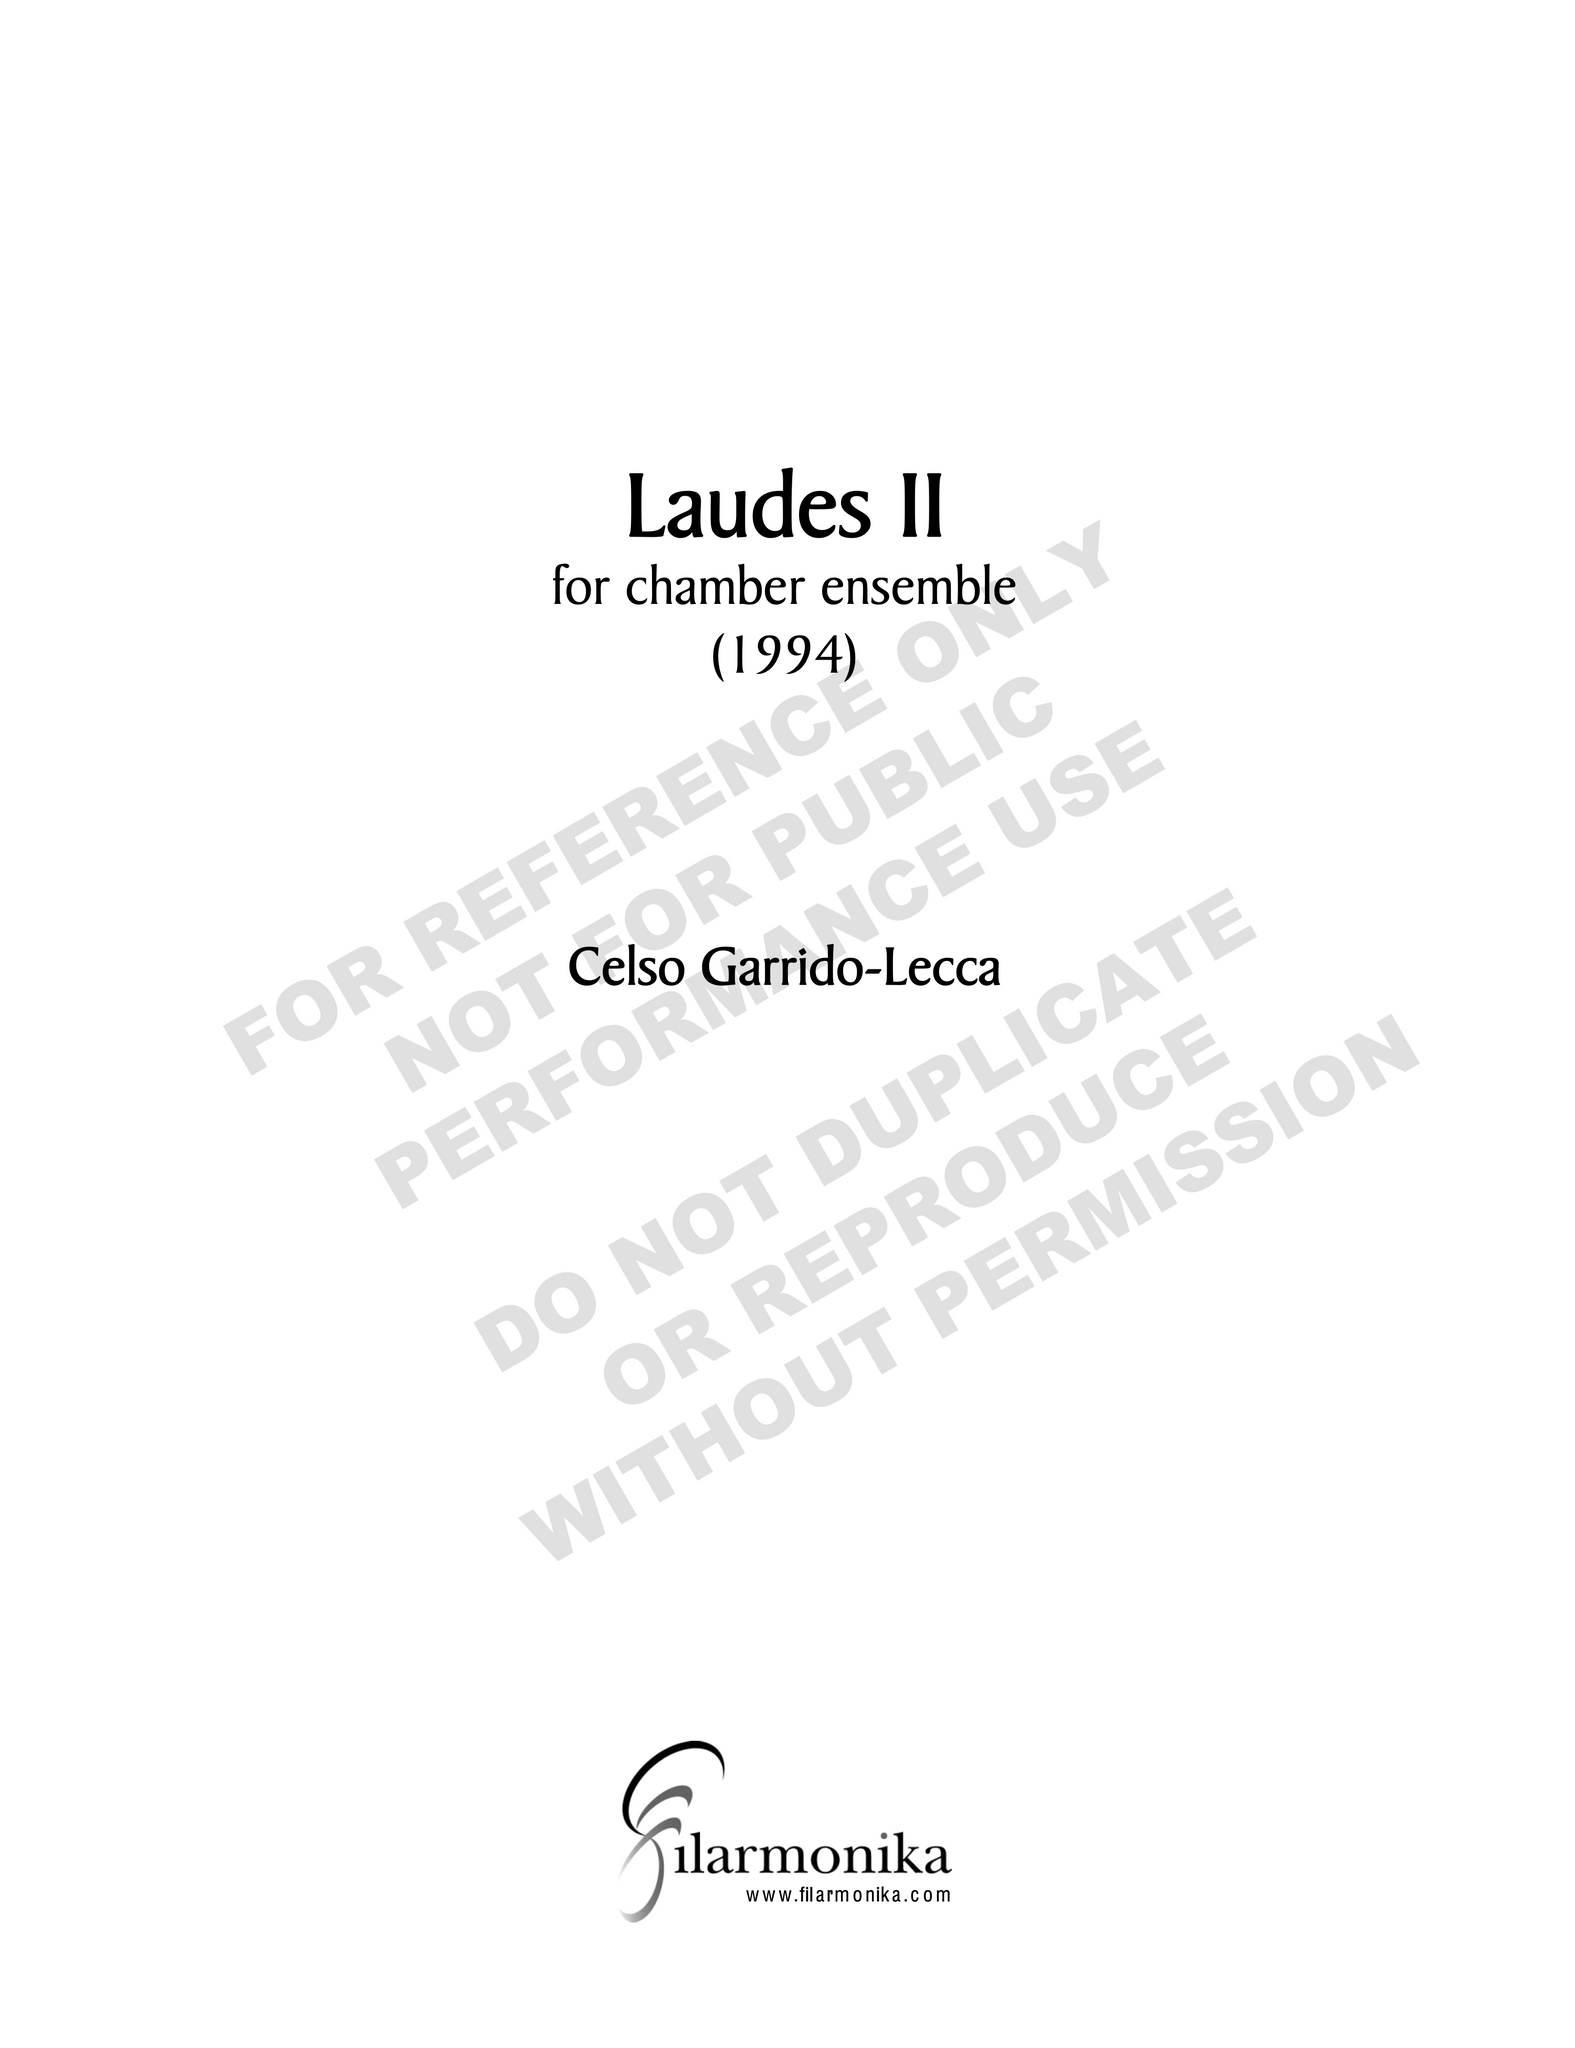 Laudes II, for chamber ensemble